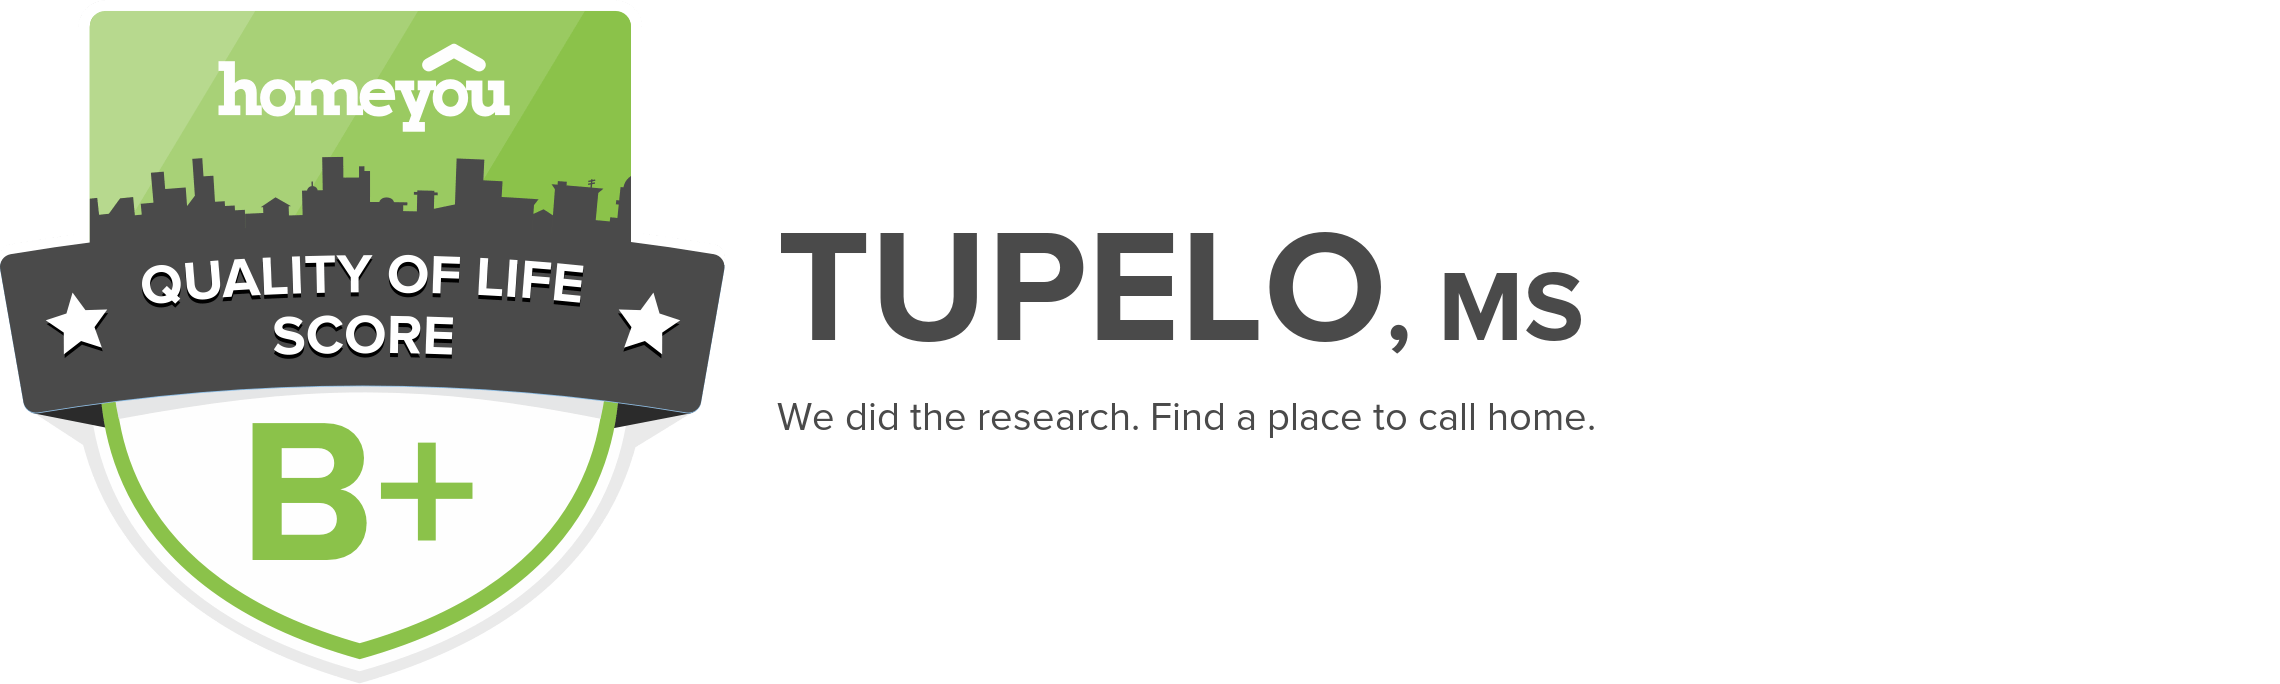 Tupelo, MS